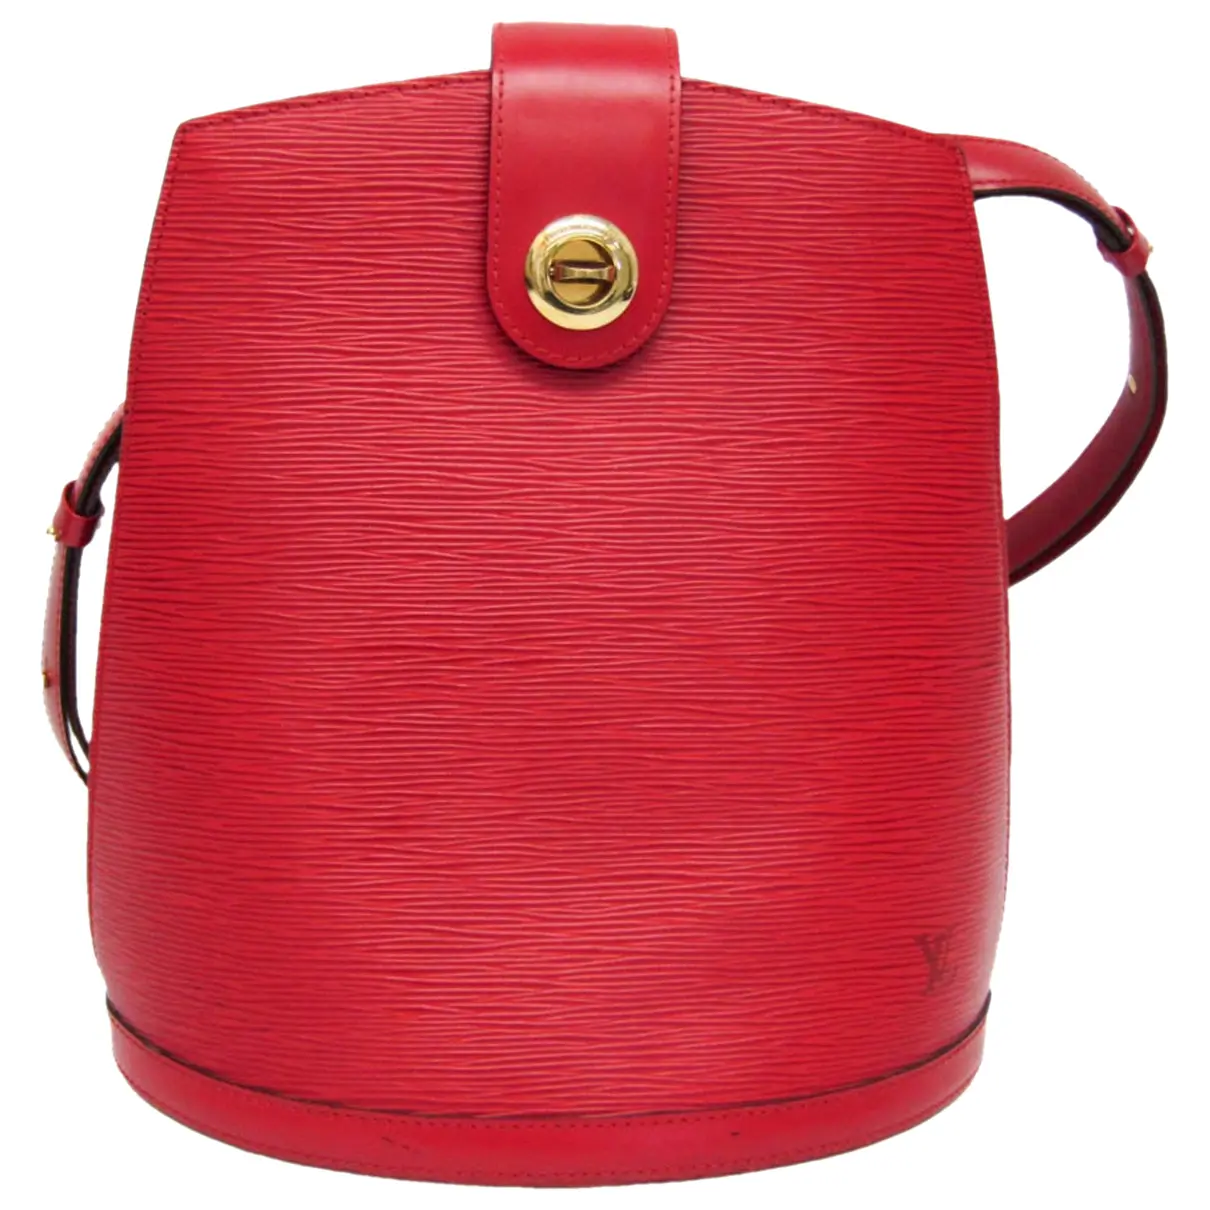 Cluny leather handbag